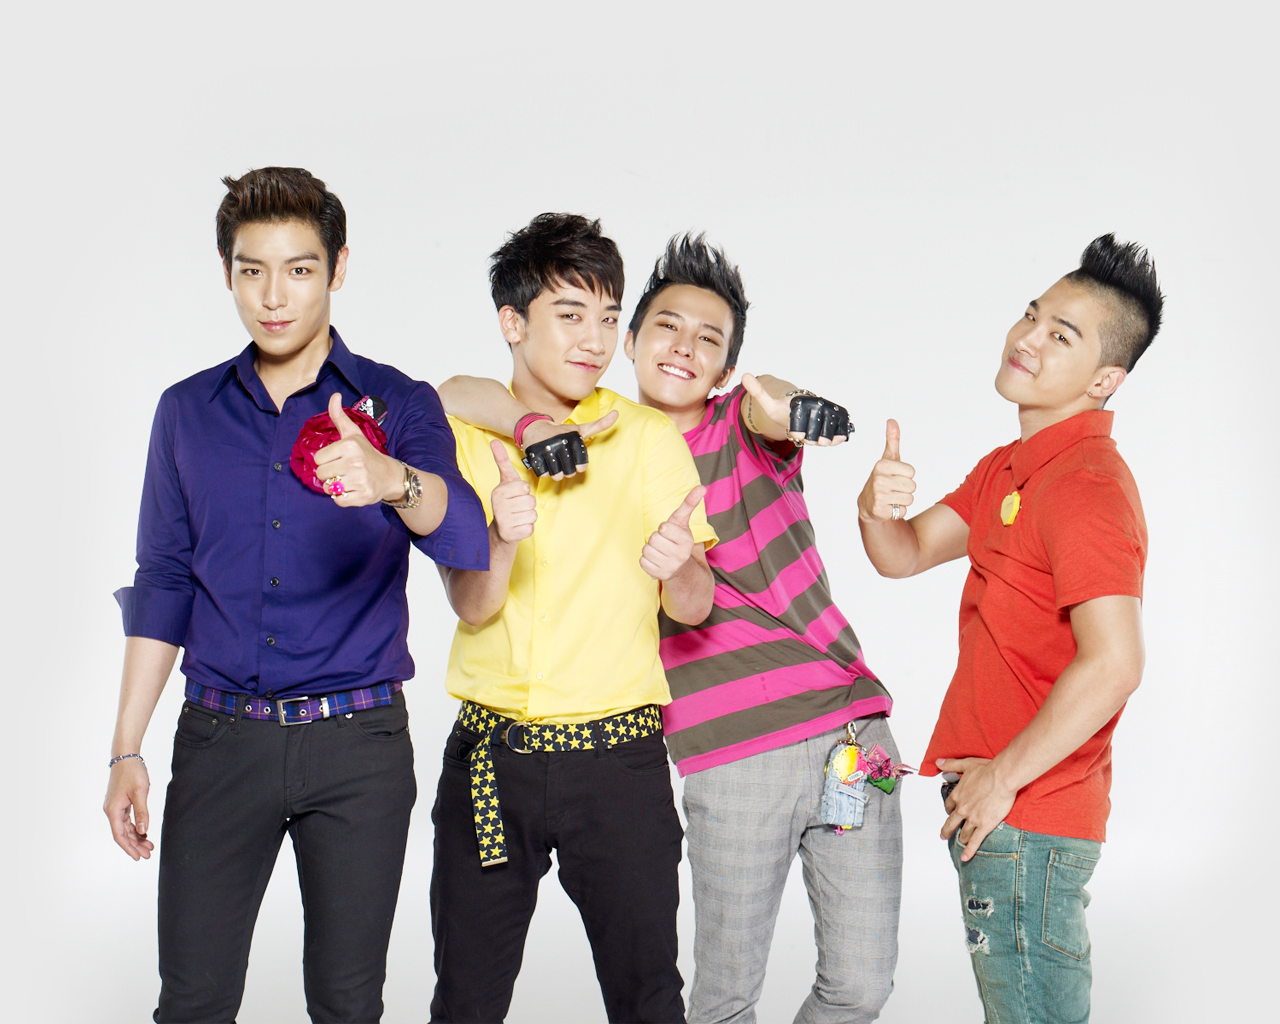 pics - [Pics] Big Bang para Sunny10 Sparklingade  1311341282_Gallery_BIGBANG1